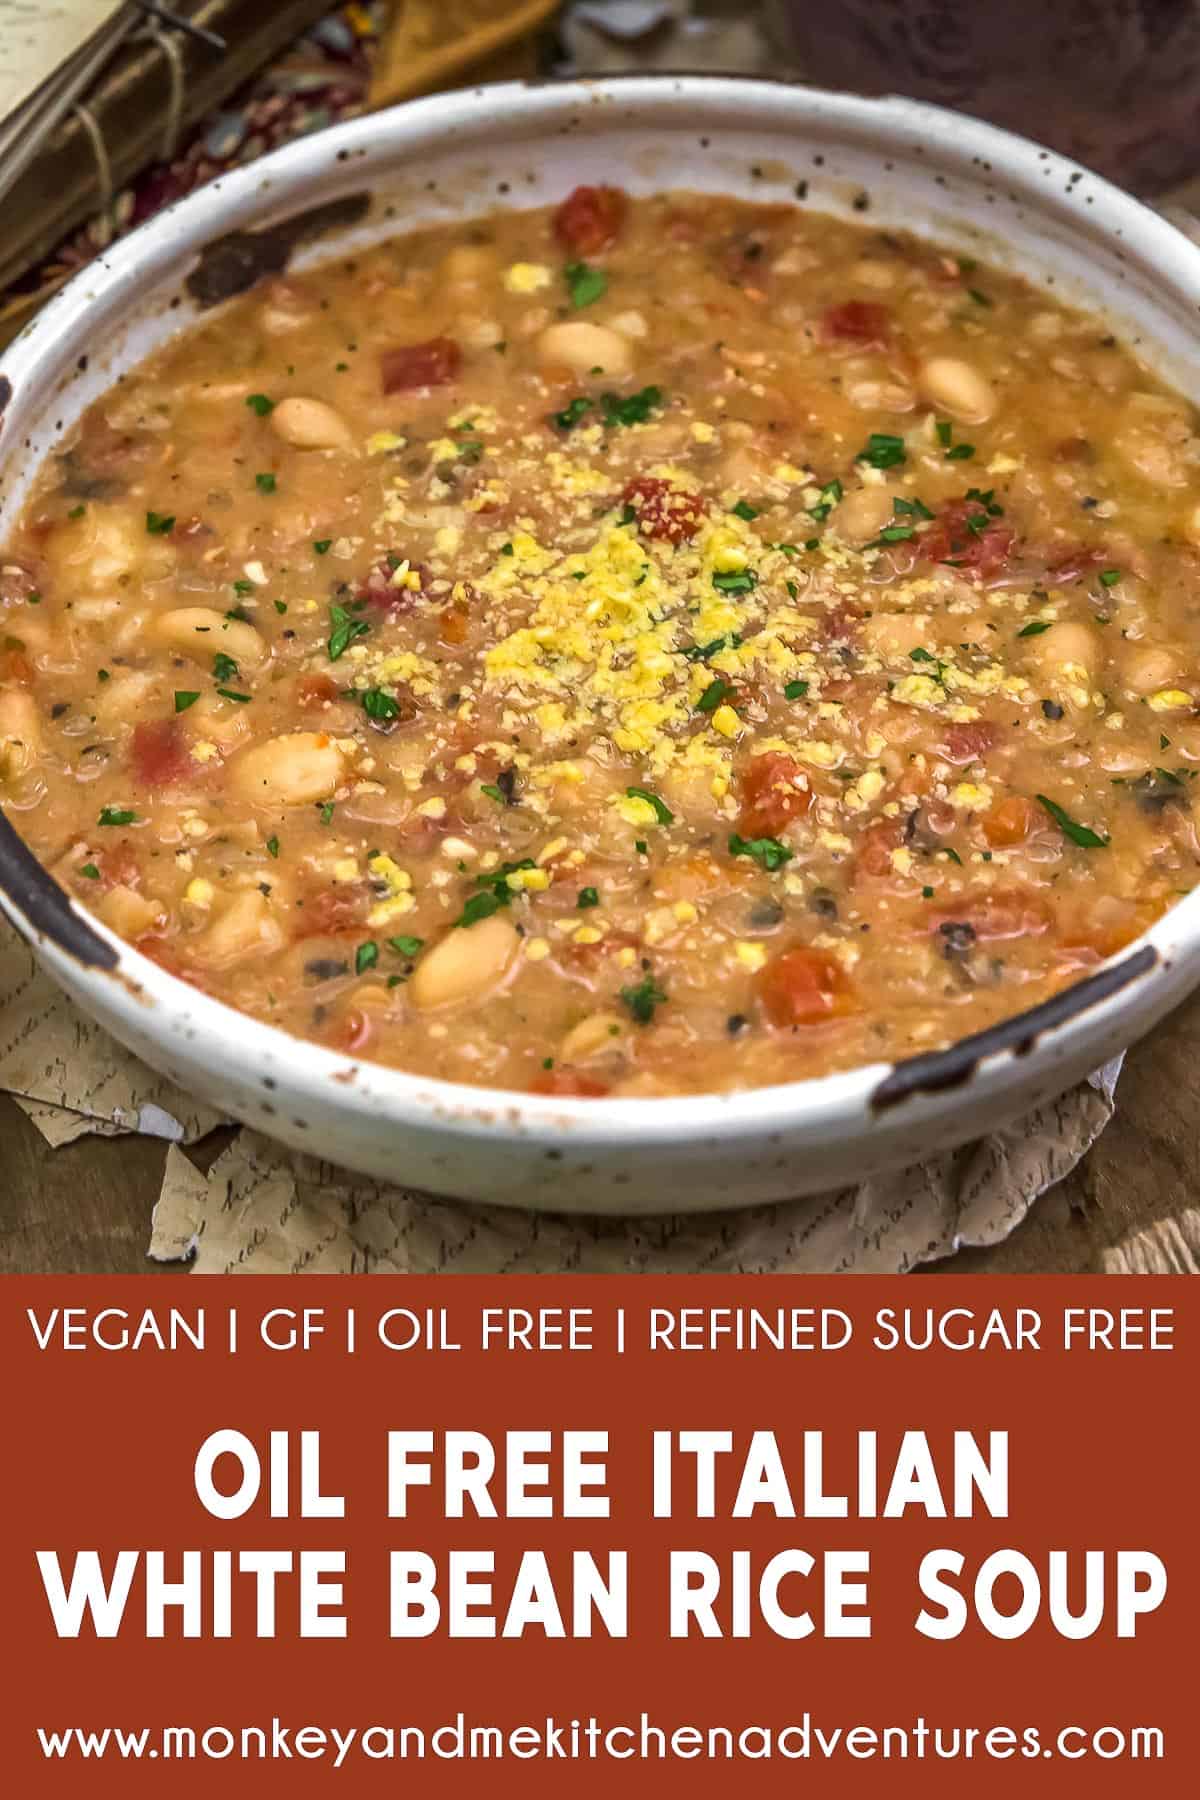 Oil Free Italian White Bean Rice Soup with Text Description